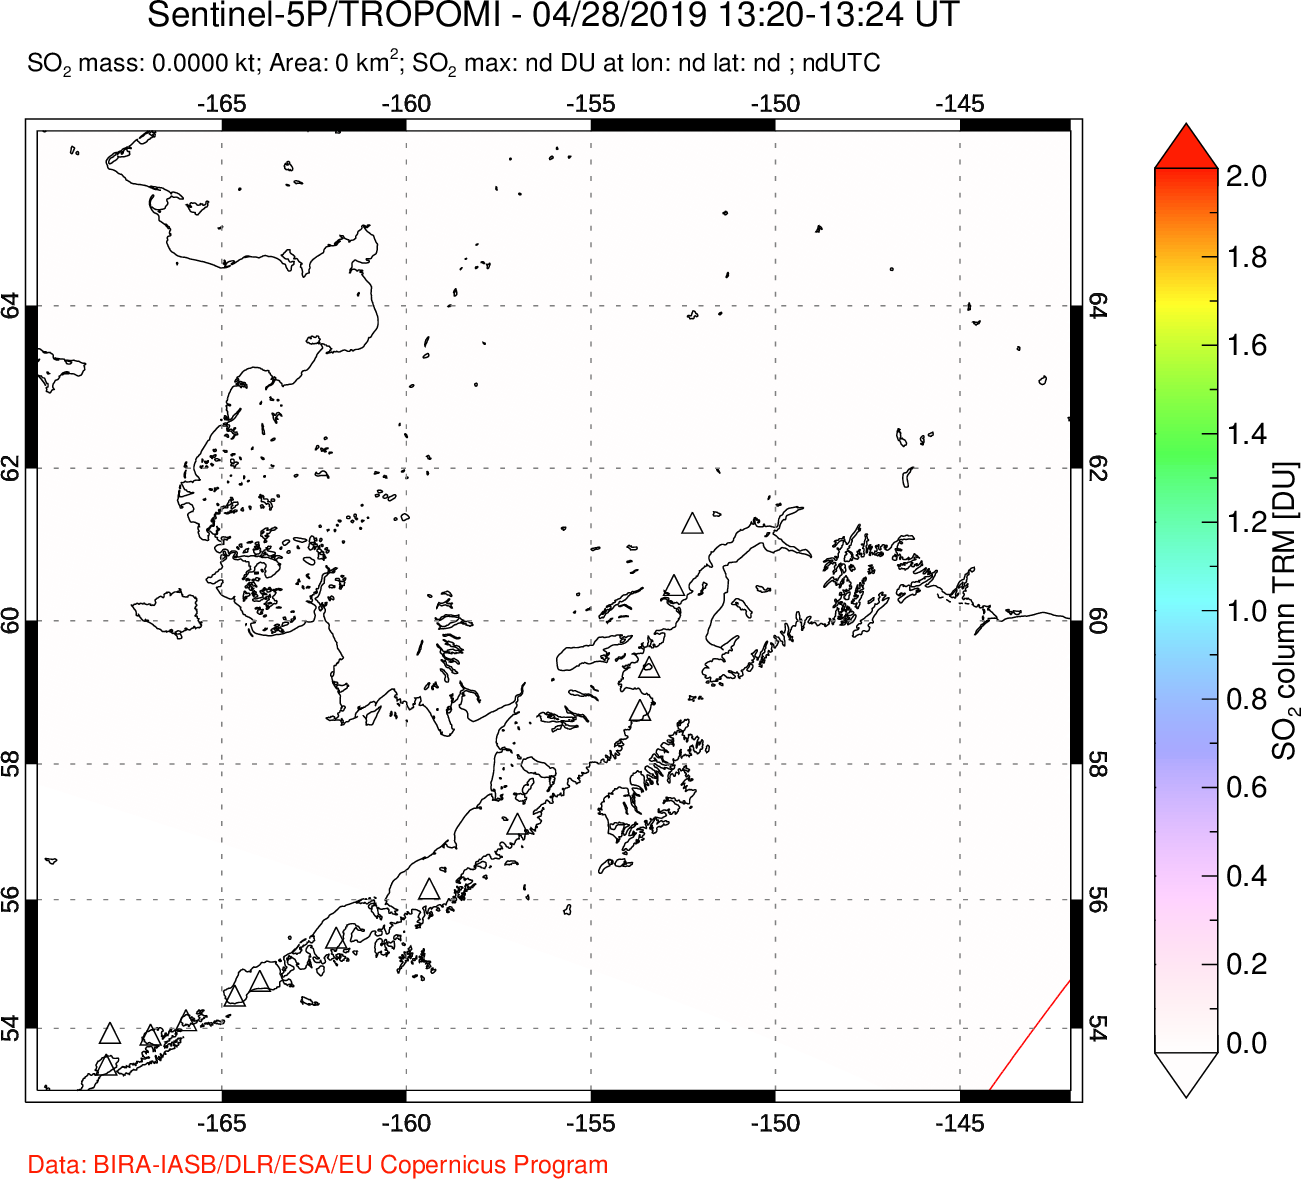 A sulfur dioxide image over Alaska, USA on Apr 28, 2019.